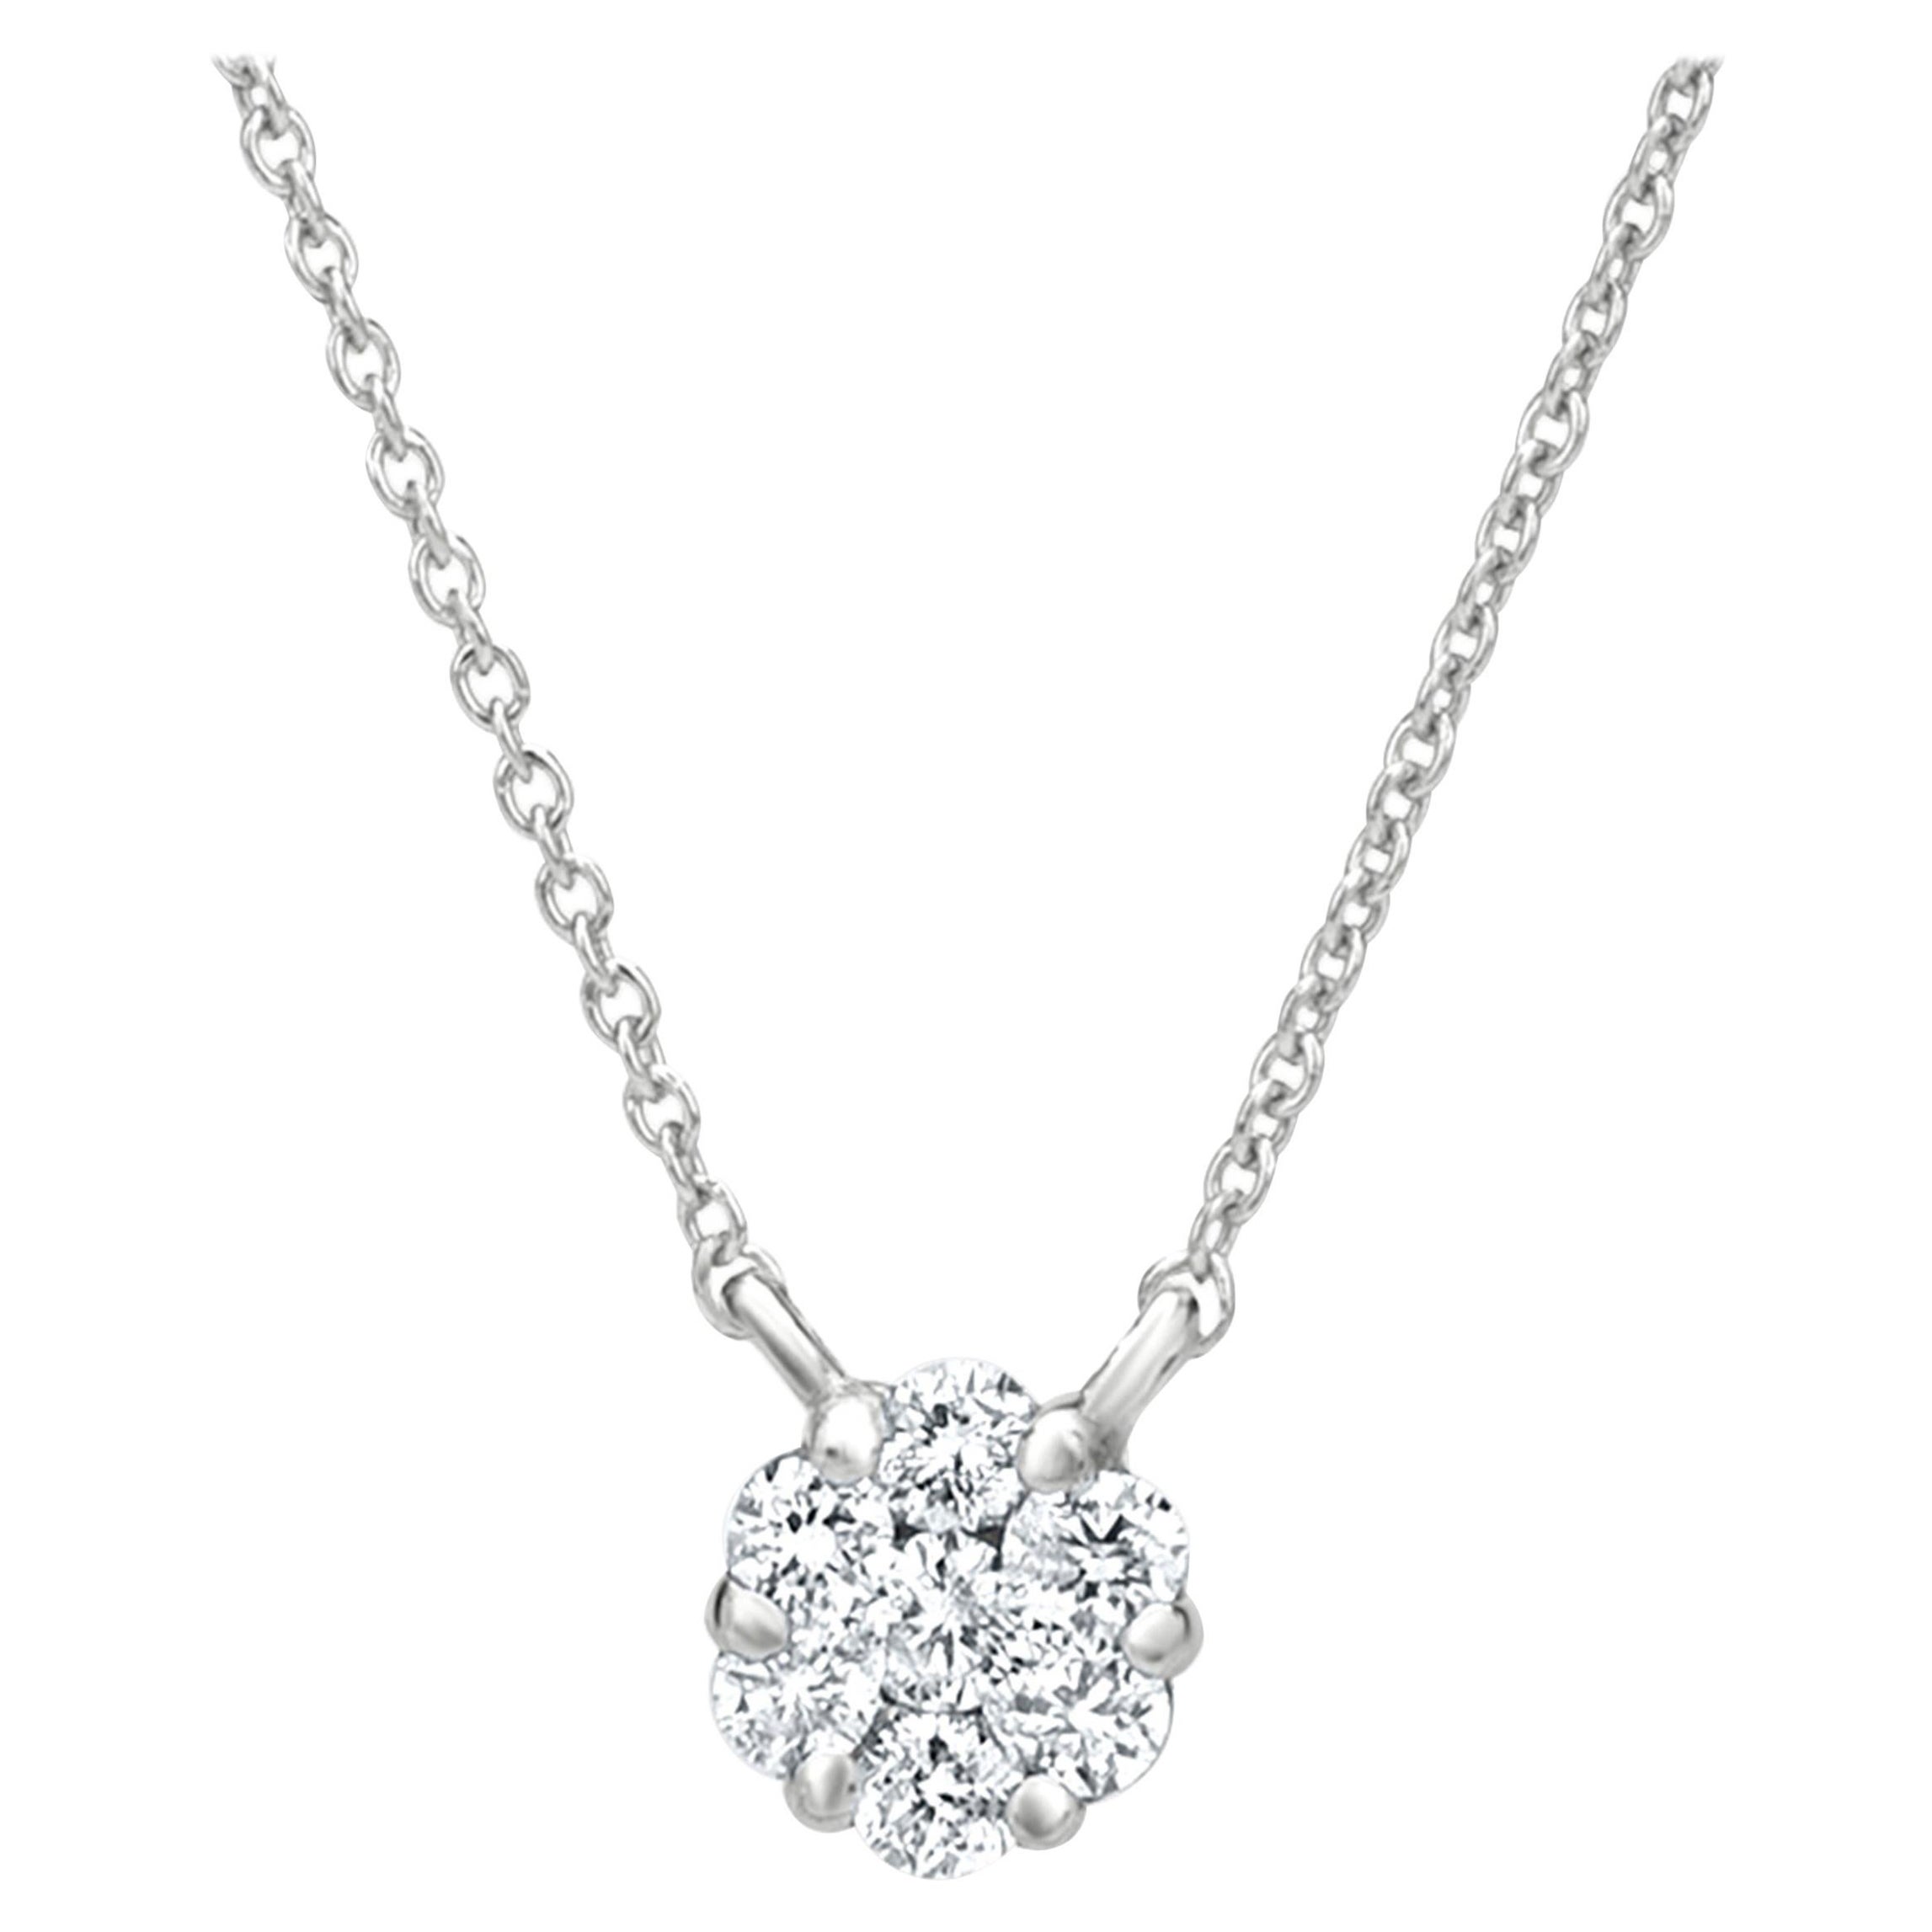 Luxle Cluster Diamond Pendant Necklace in 18K White Gold